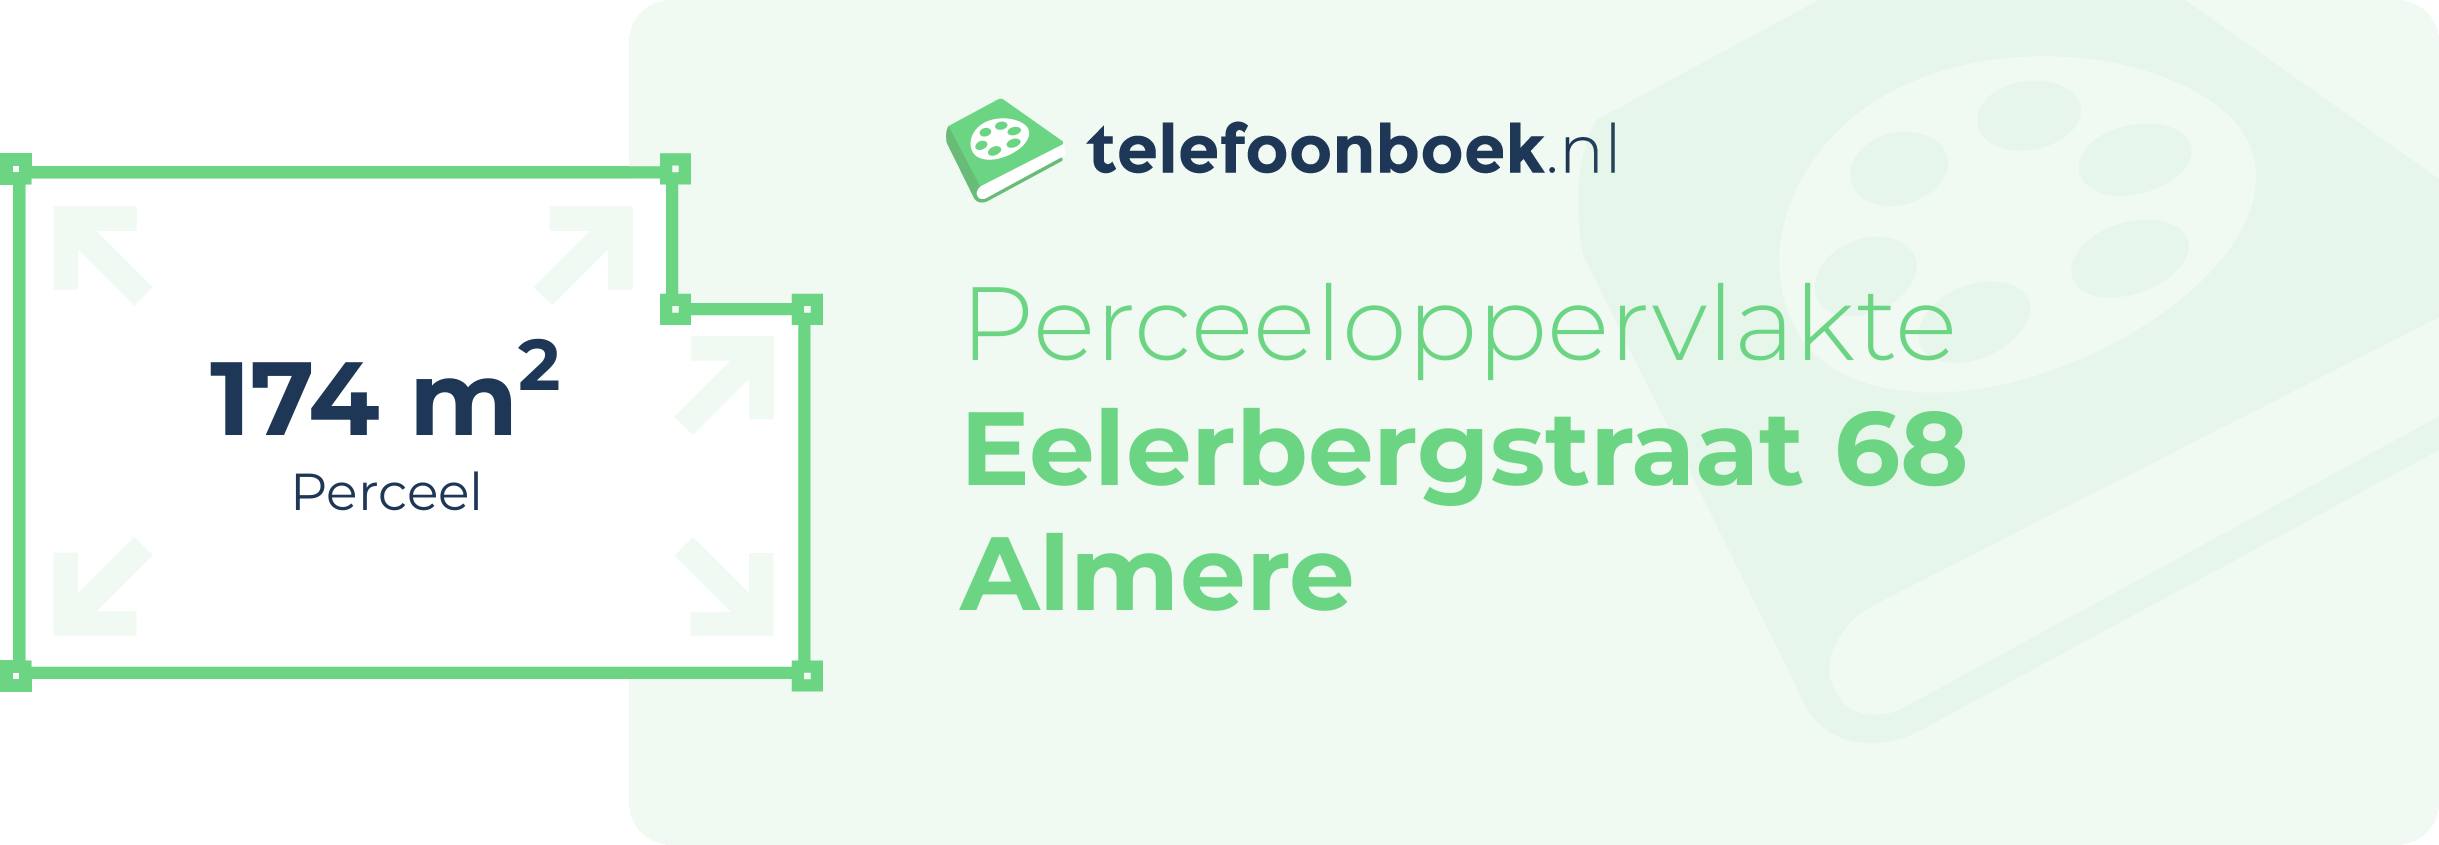 Perceeloppervlakte Eelerbergstraat 68 Almere